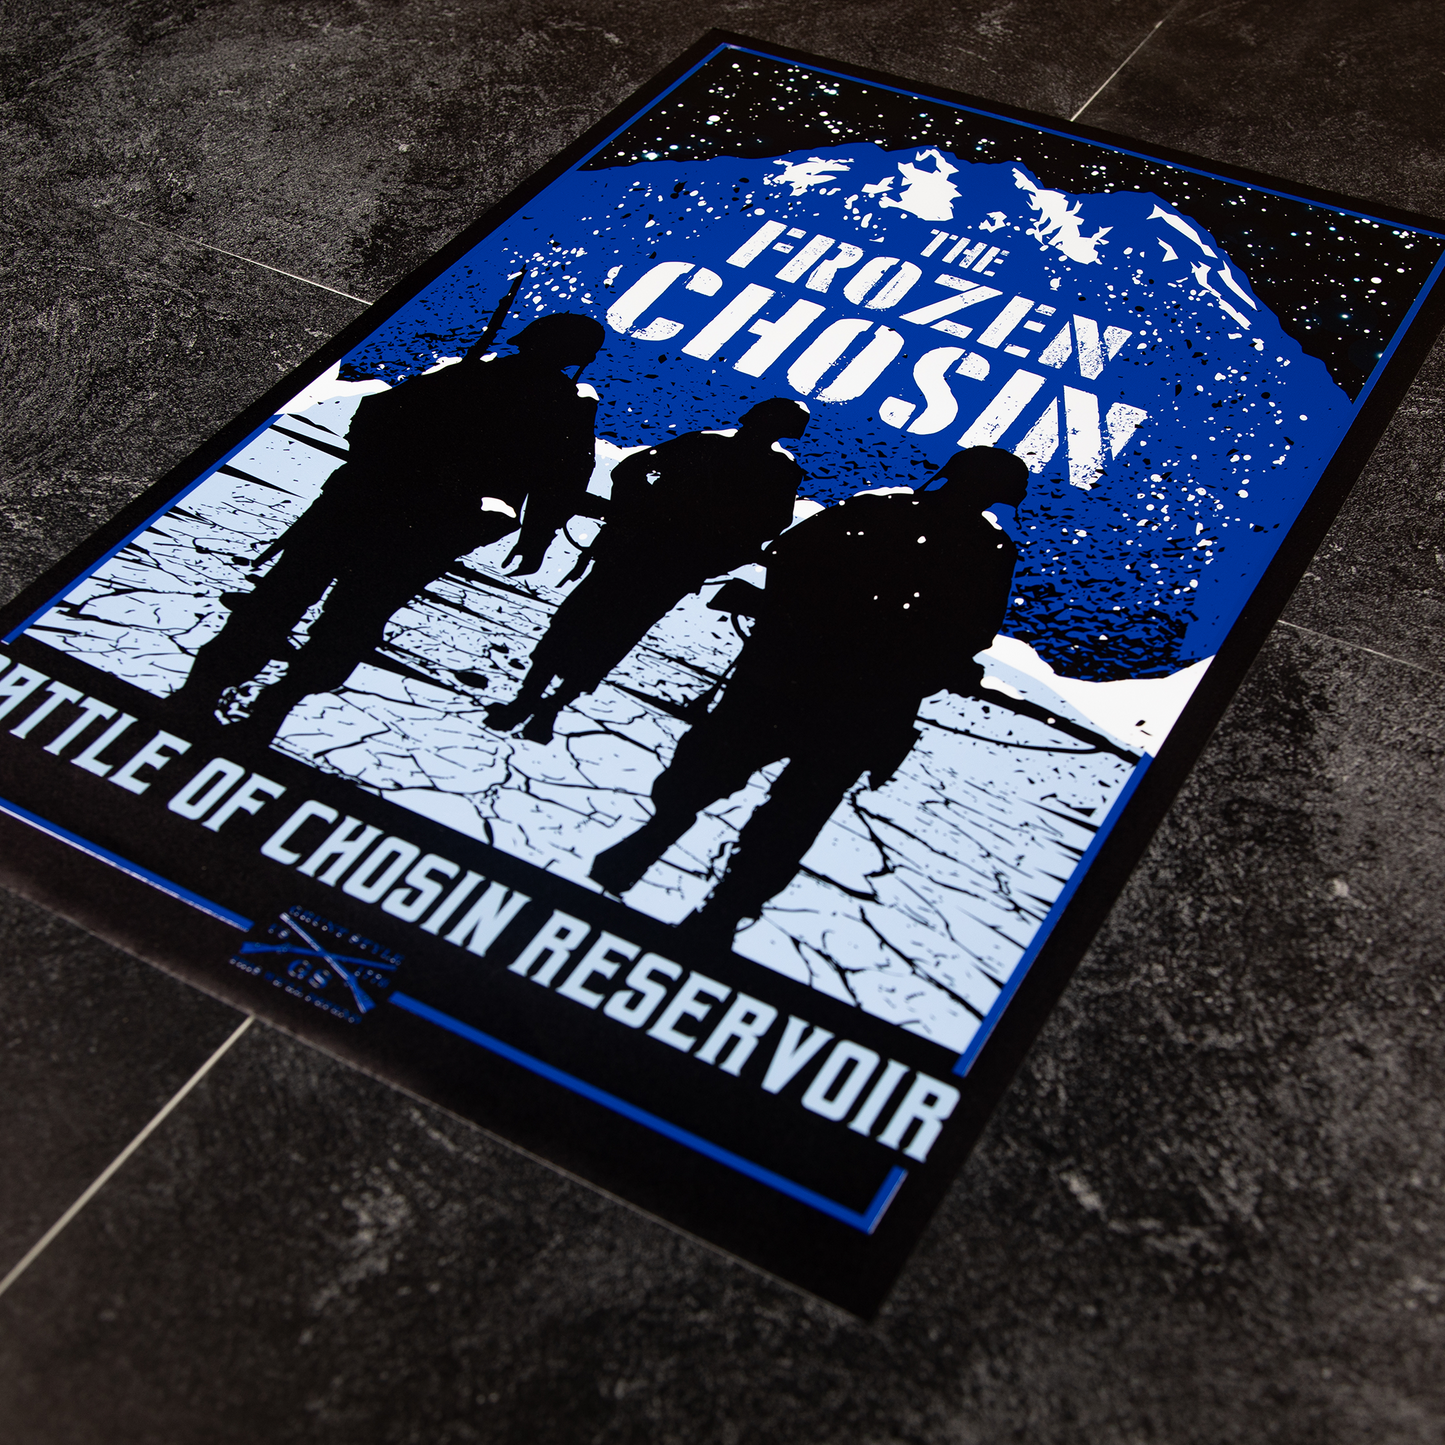  Frozen Chosin Poster